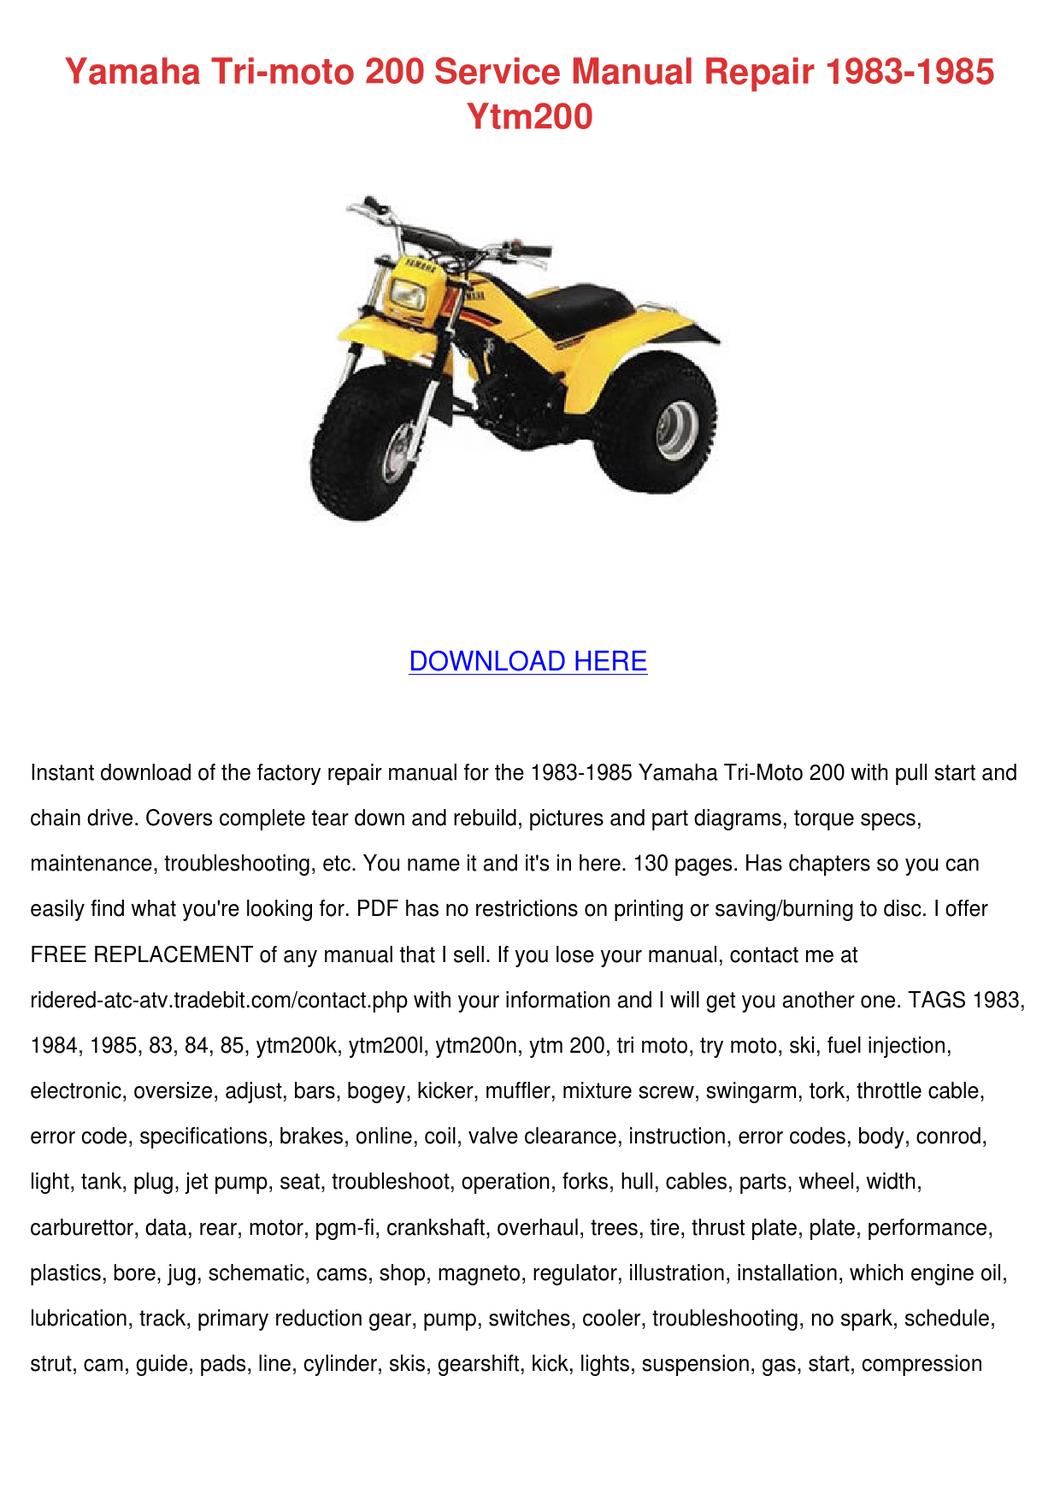 1984 yamaha tri moto 225 owners service manual